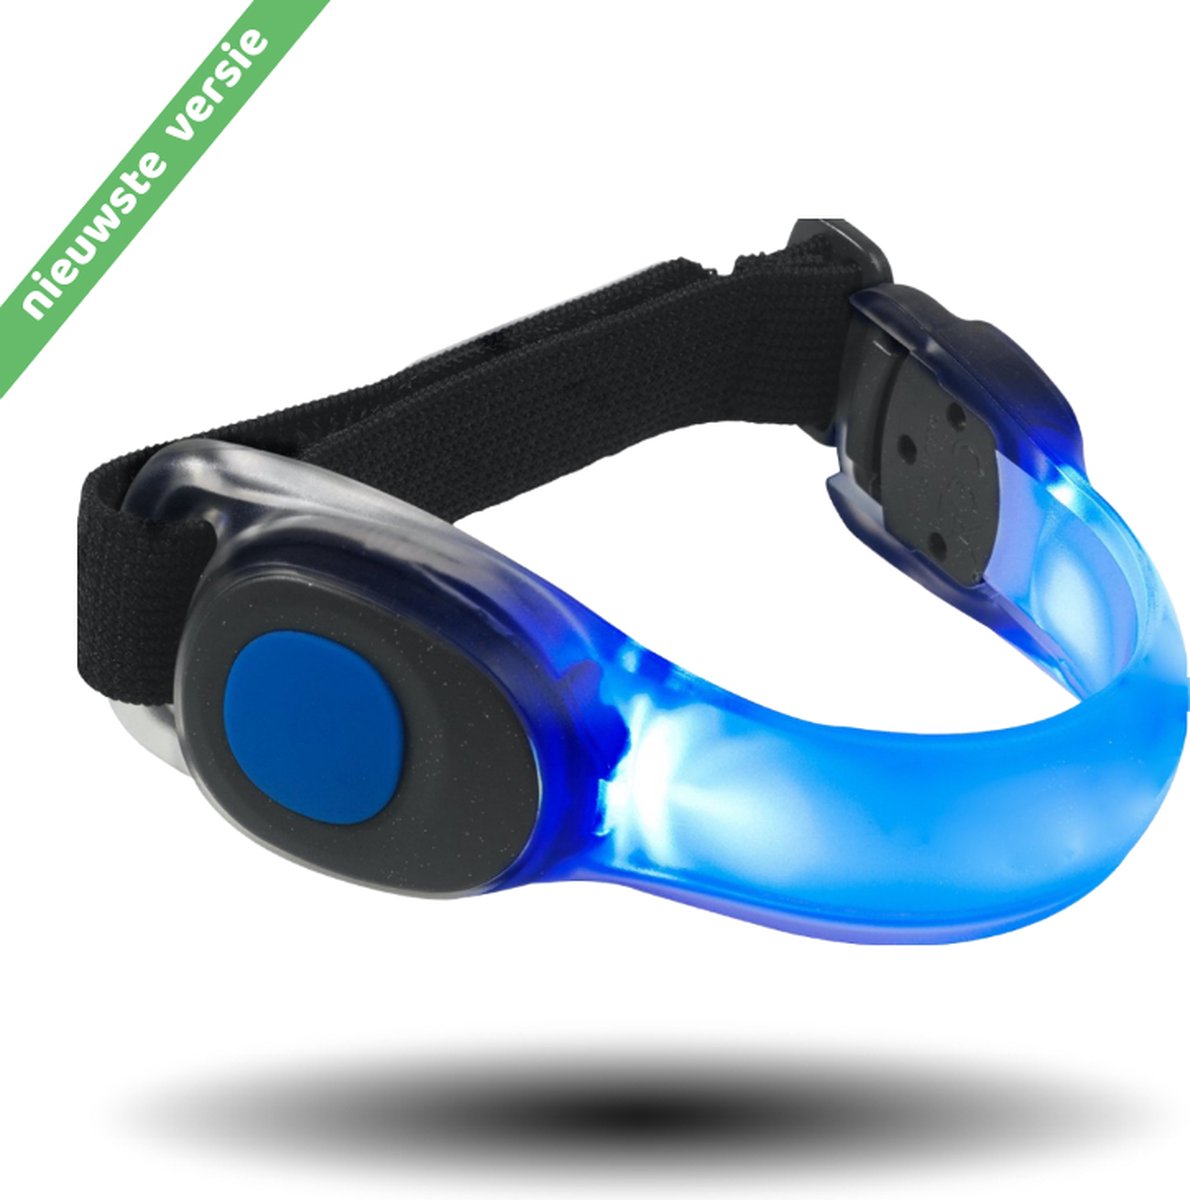 InVincer® - Hardloop verlichting - Hardloop lampje Blauw incl batterijen - LED glow armband verlichting - Running light - safety sport armband - Lampje Hardlopen - Reflecterende armband - Water resistant - Kleur: Blauw - INVINCER